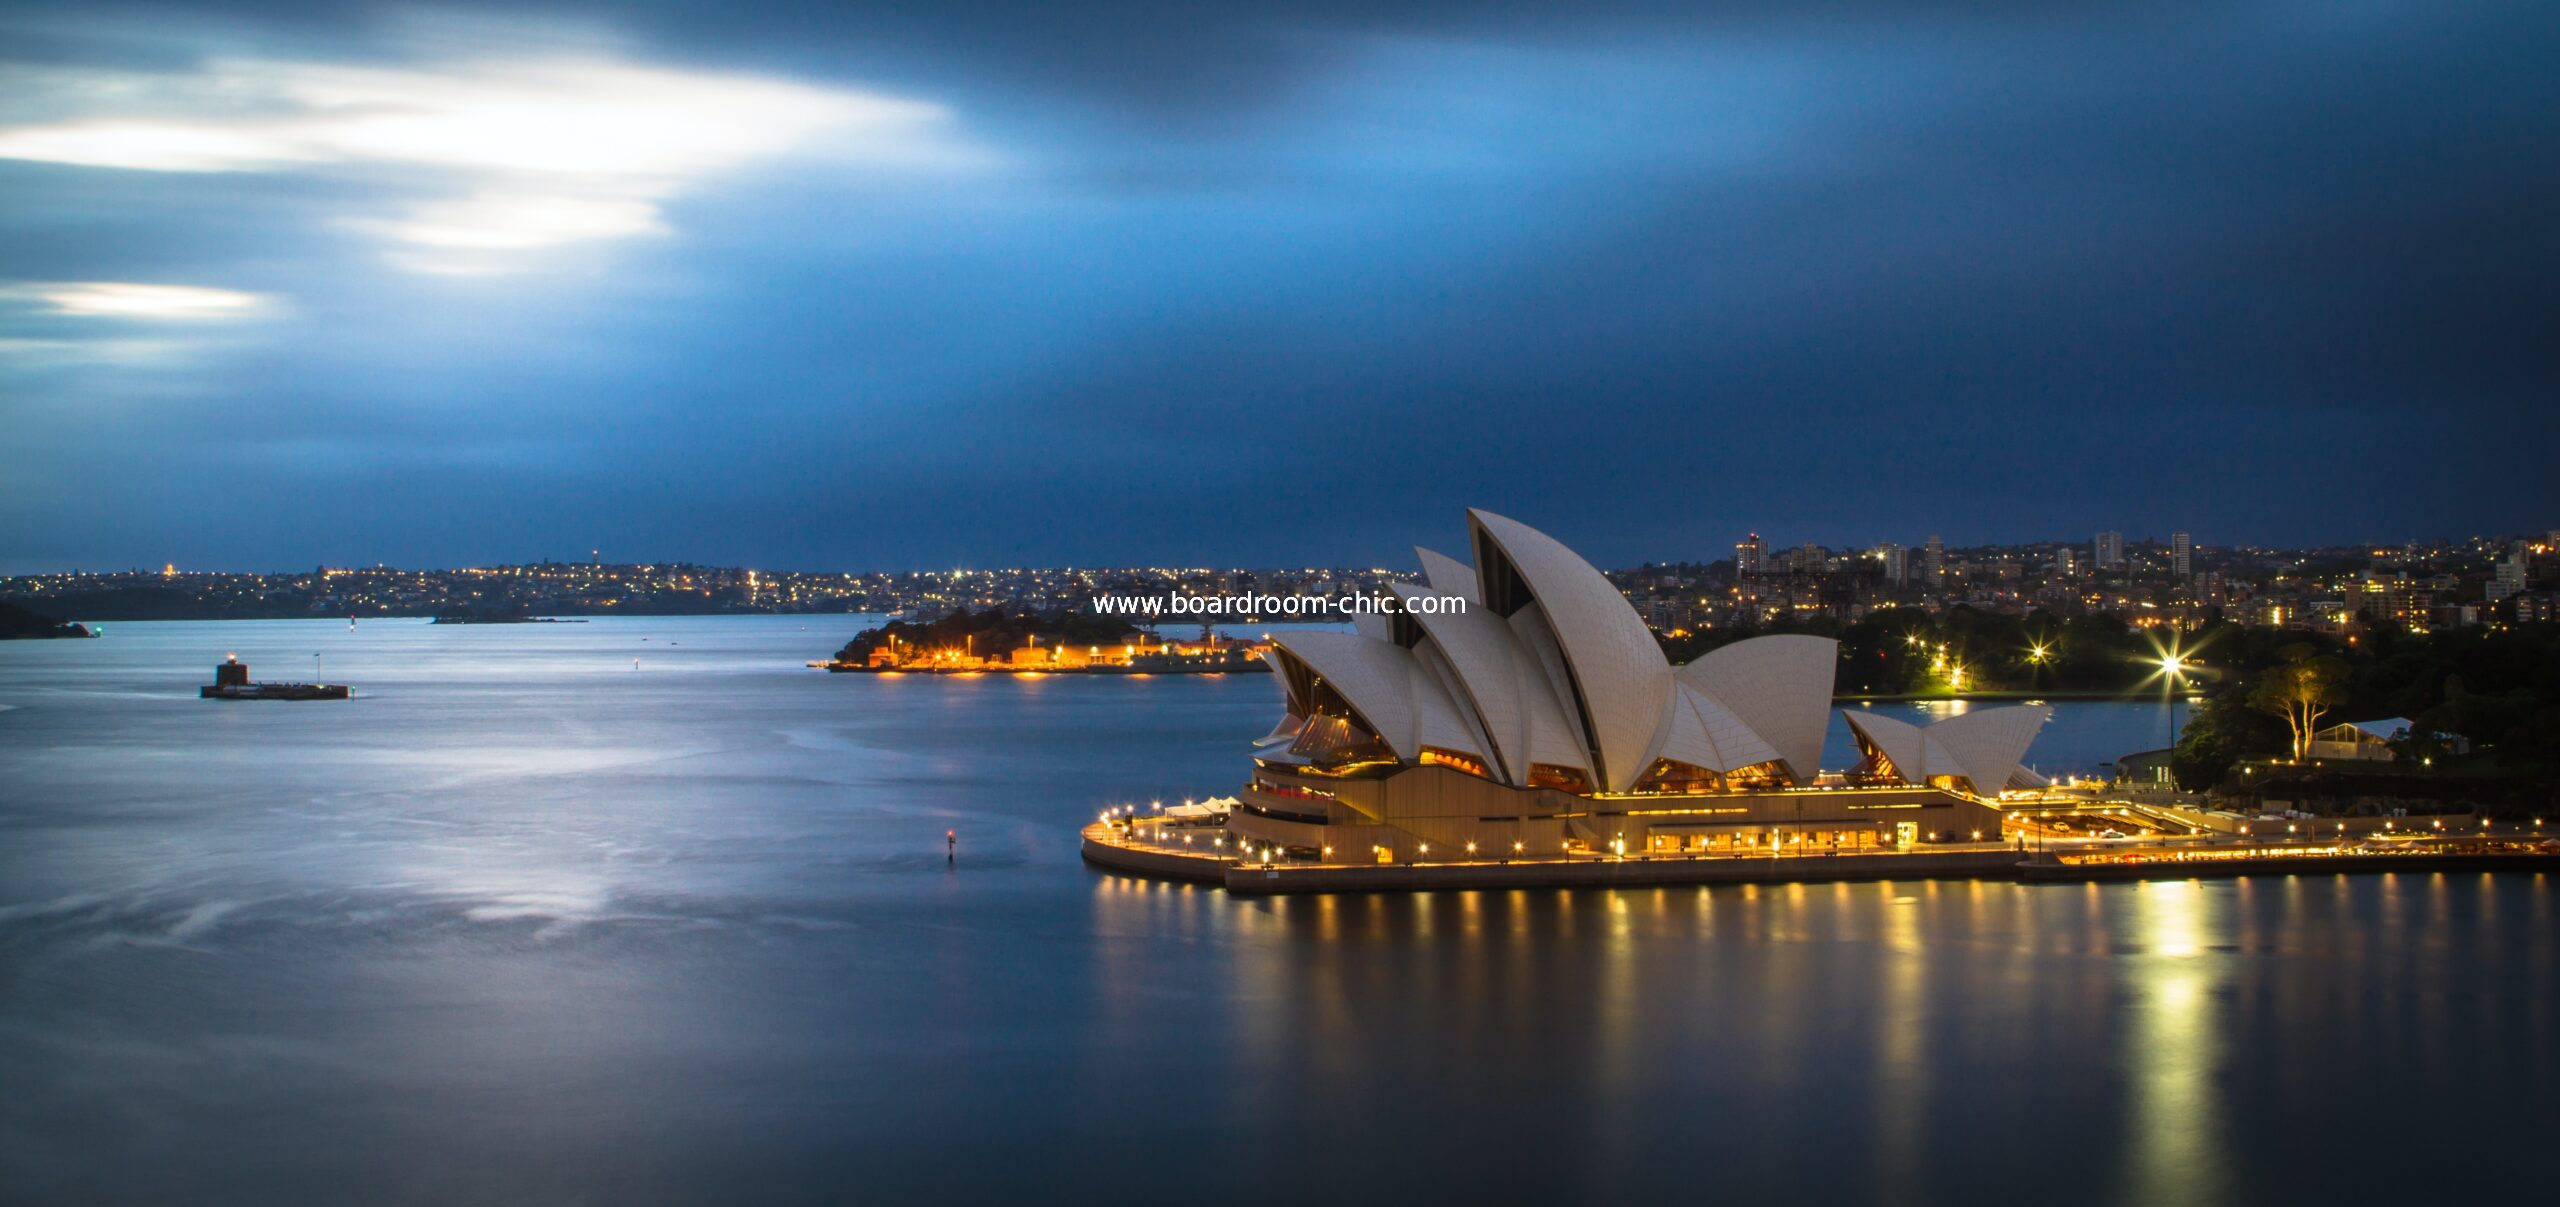 Iconic Sydney Opera House representing Australia's visa sponsorship job opportunities